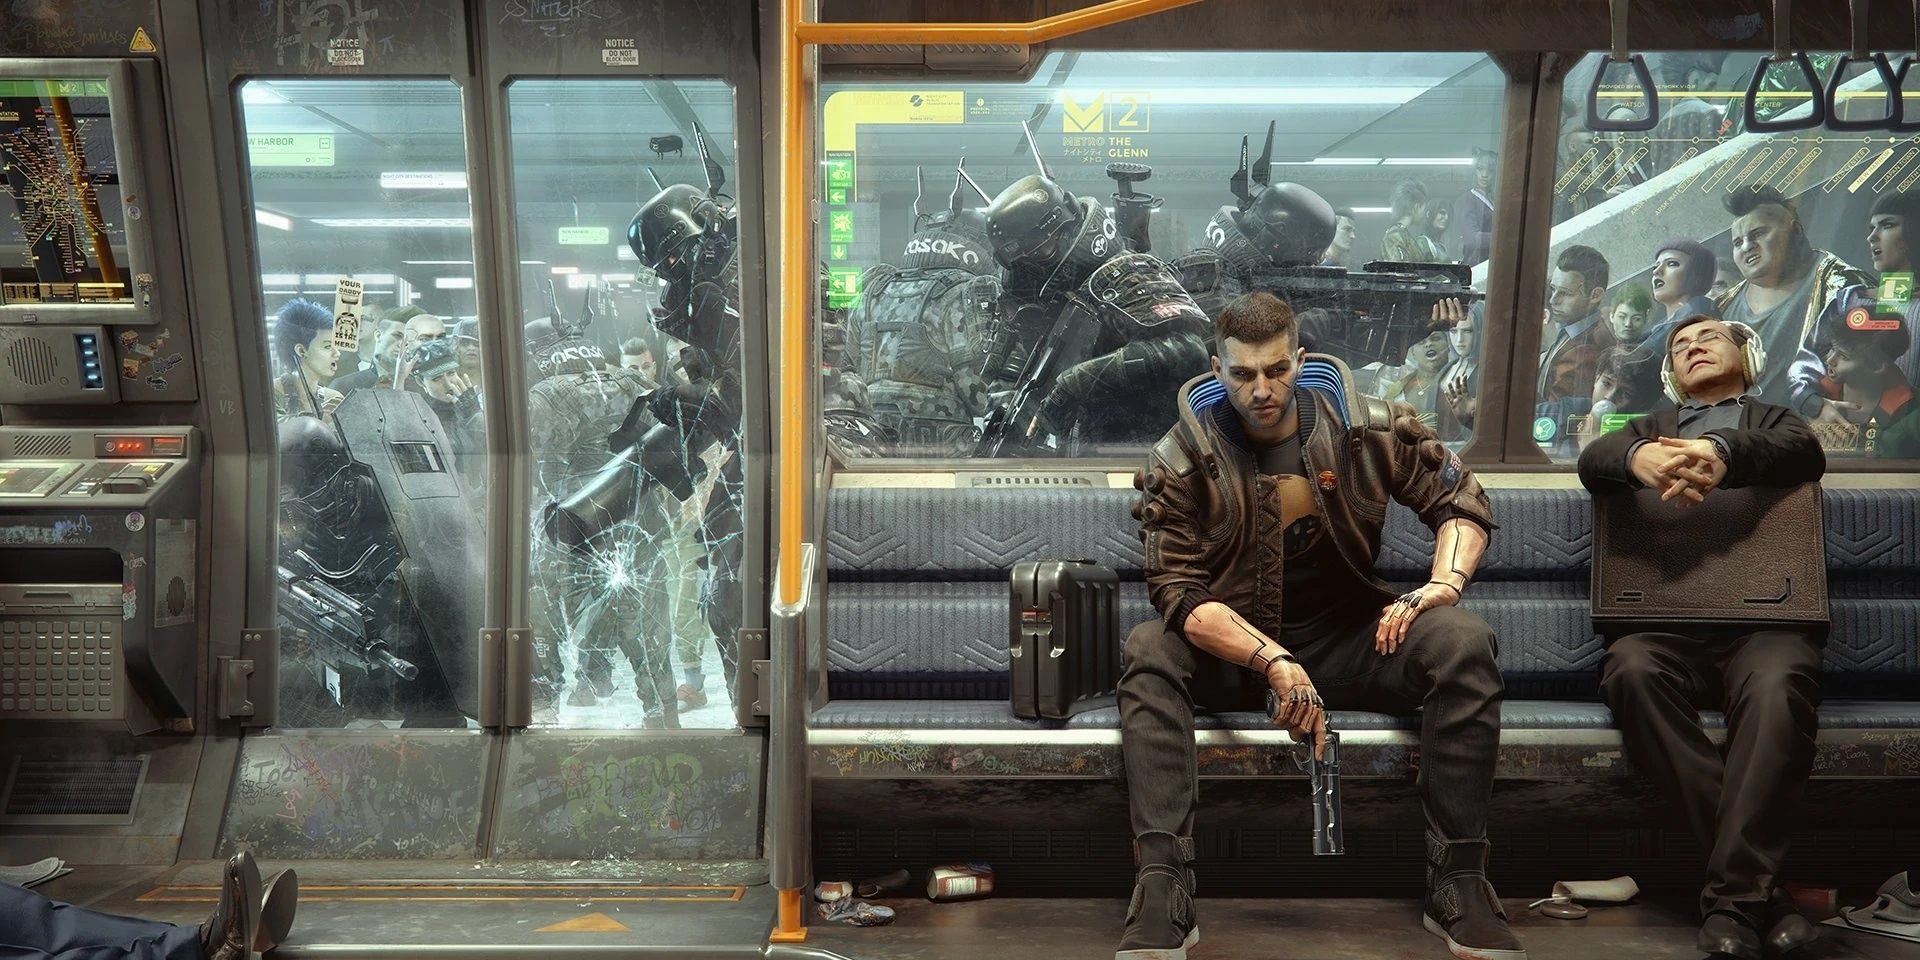 Arasaka Soldiers in a subway train in Cyberpunk 2077